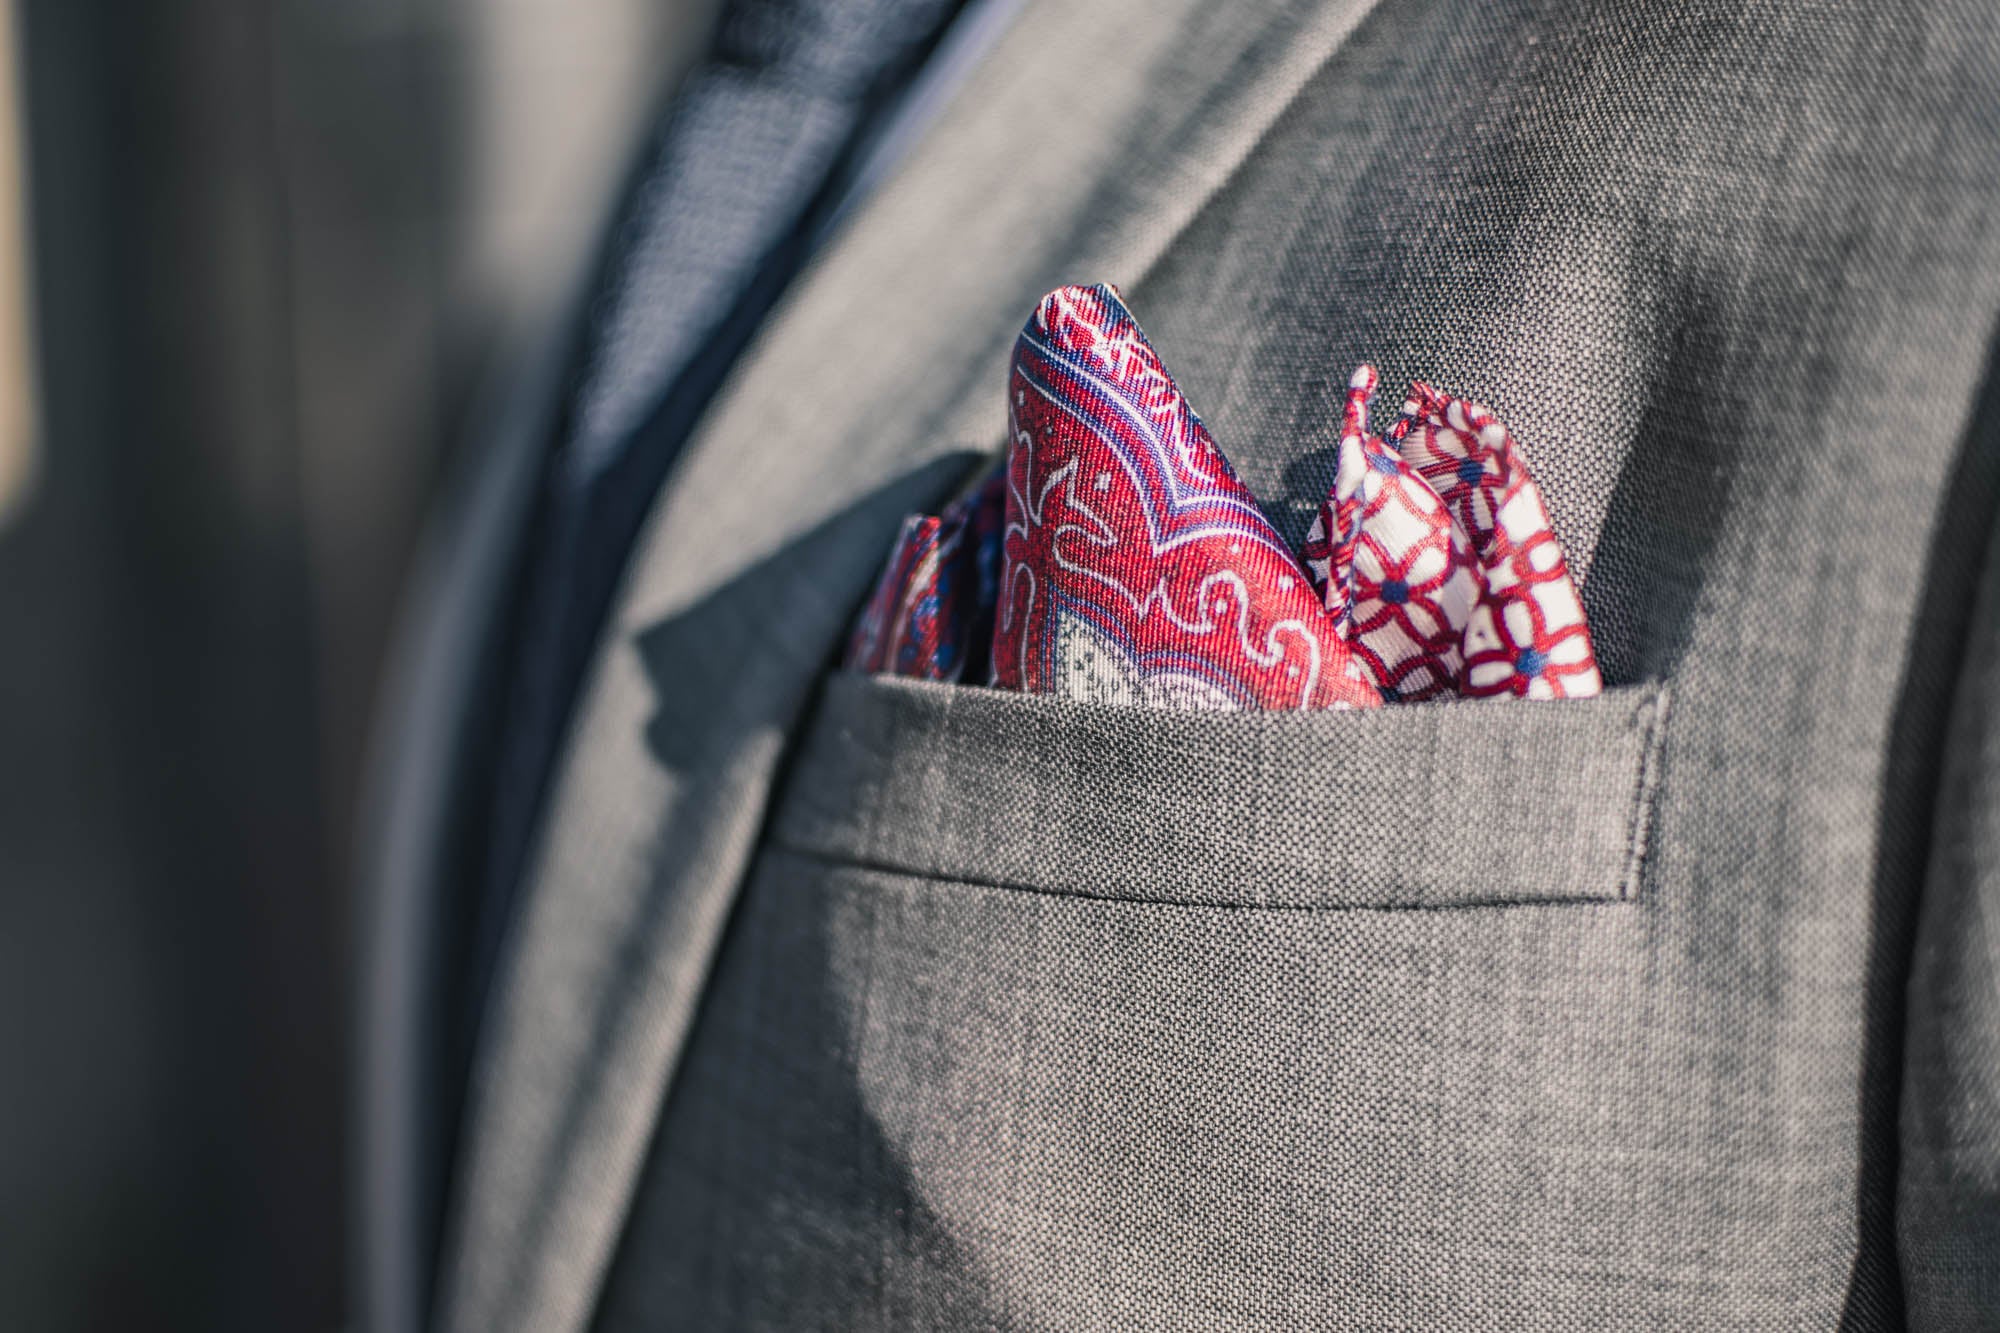 The Primo Solid Silk Tie Necktie & Pocket Square / Regular (60) / Red